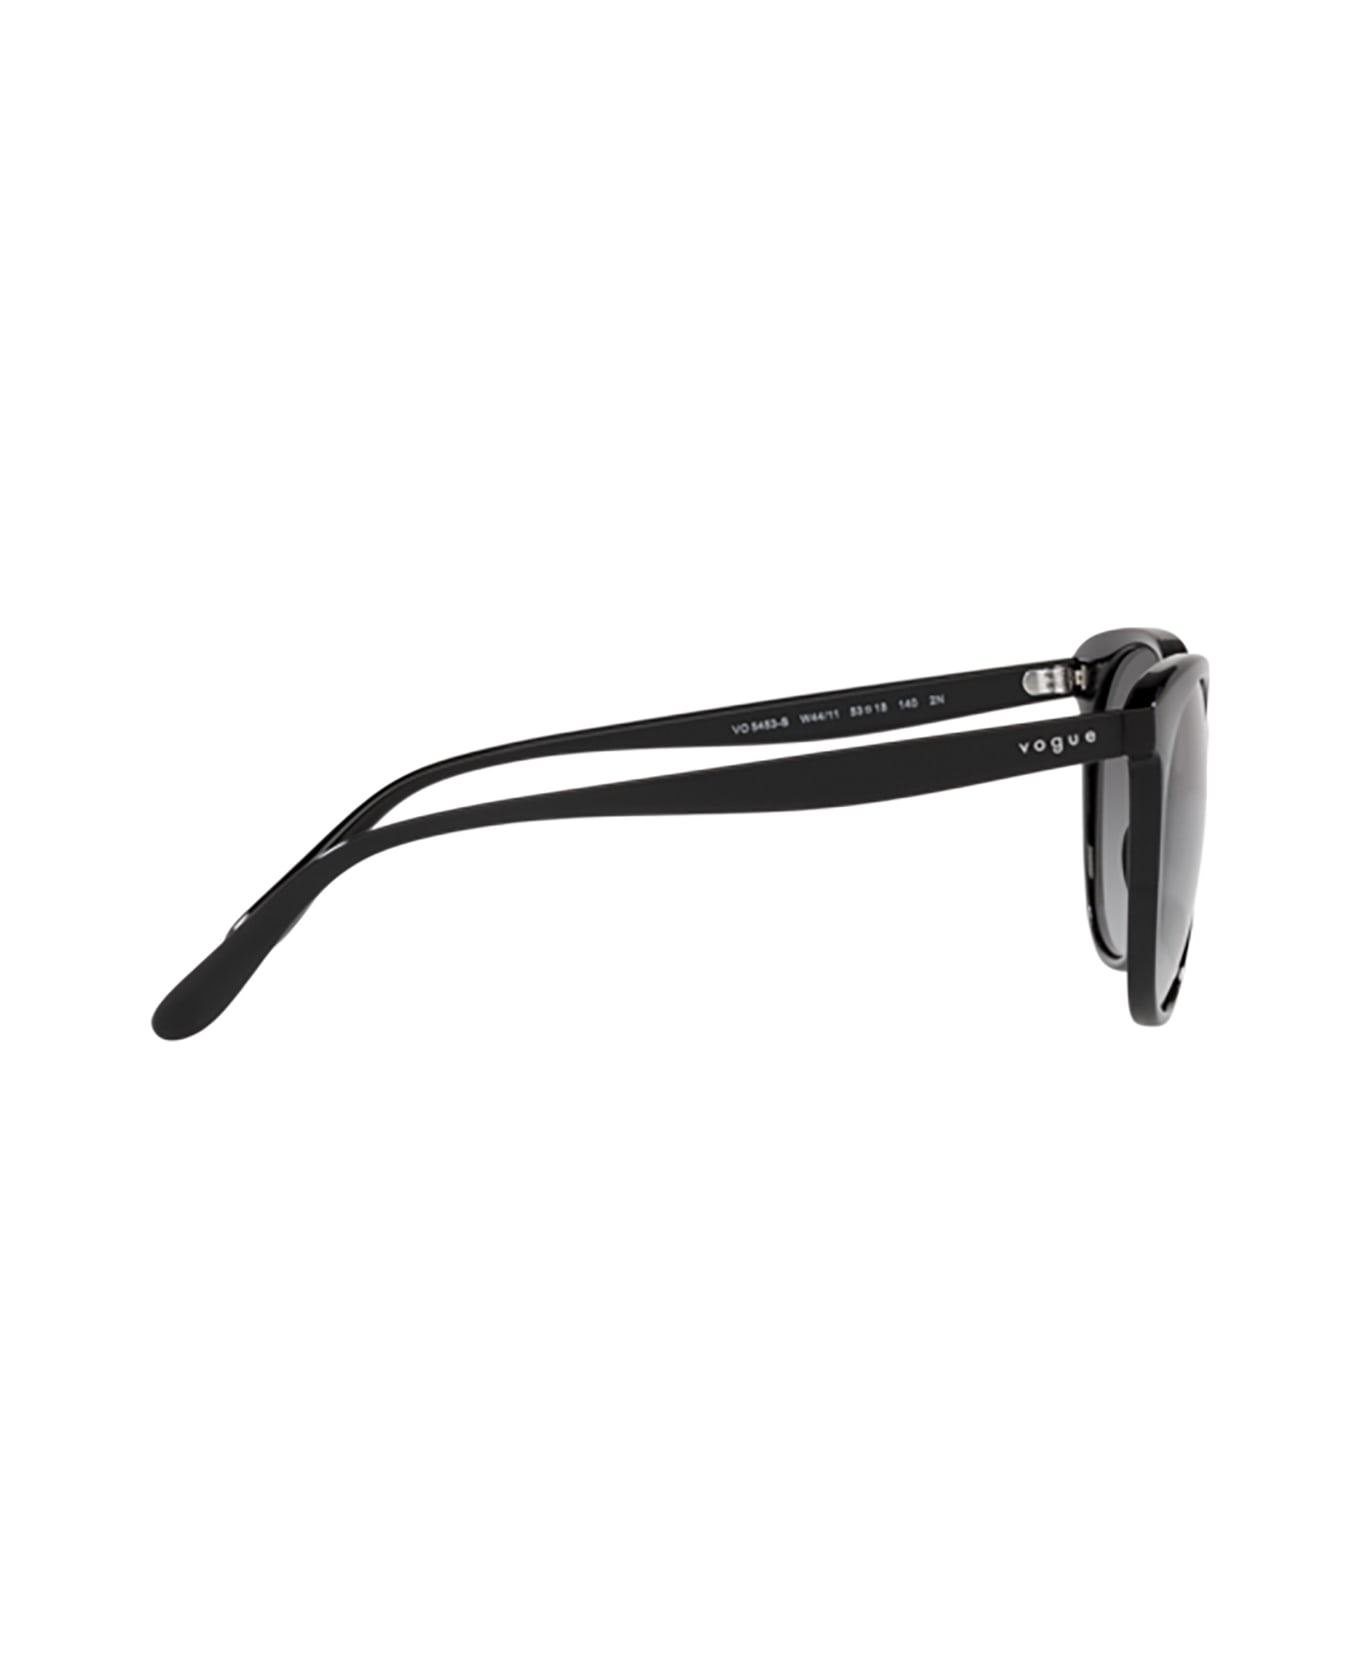 Vogue Eyewear Vo5453s Black Sunglasses - Black